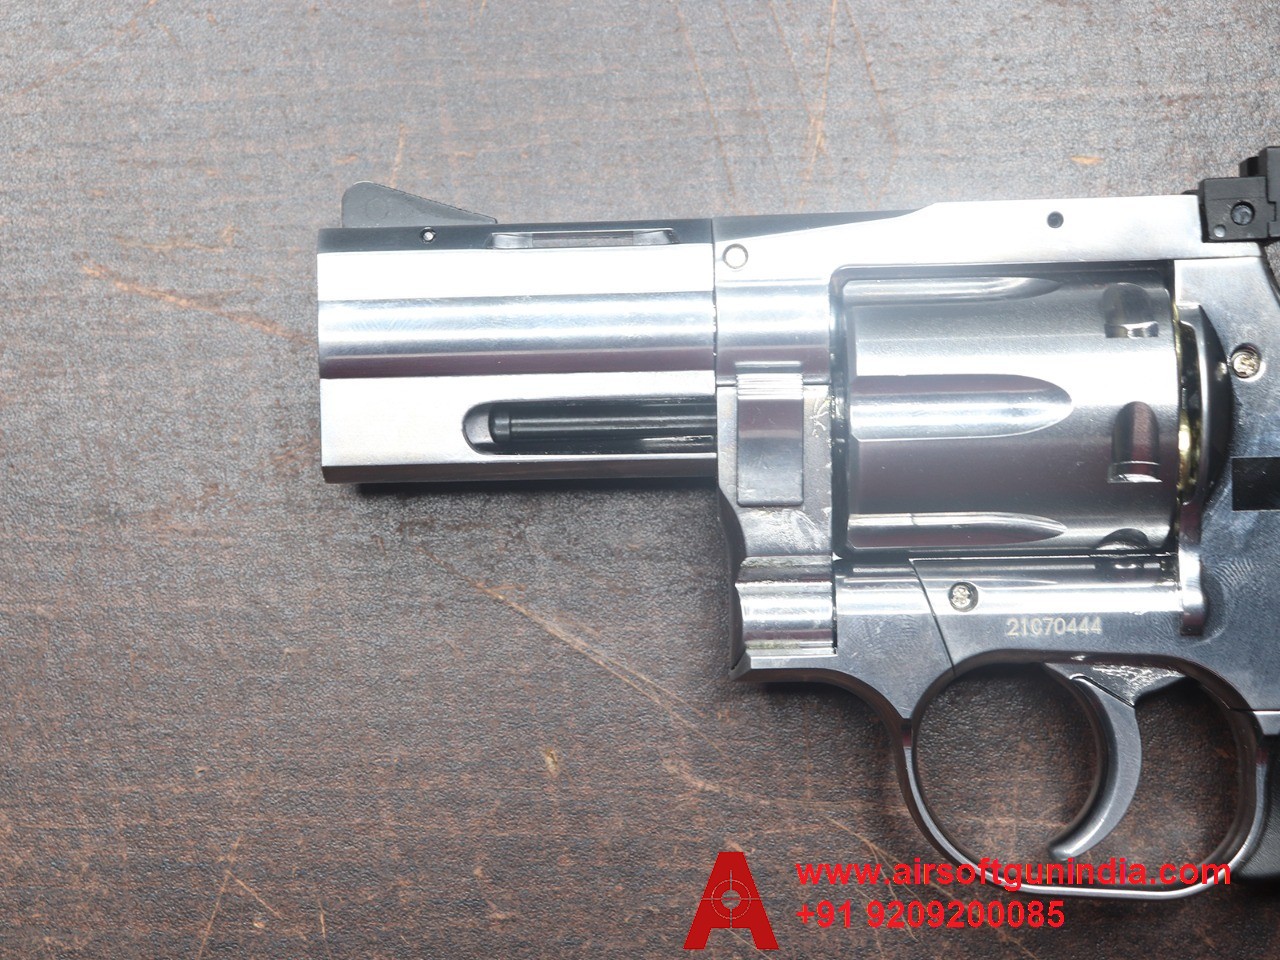 Dan Wesson 715 2.5 Inch .177Cal, 4.5mm Co2 BB Air Revolver By Airsoft Gun India